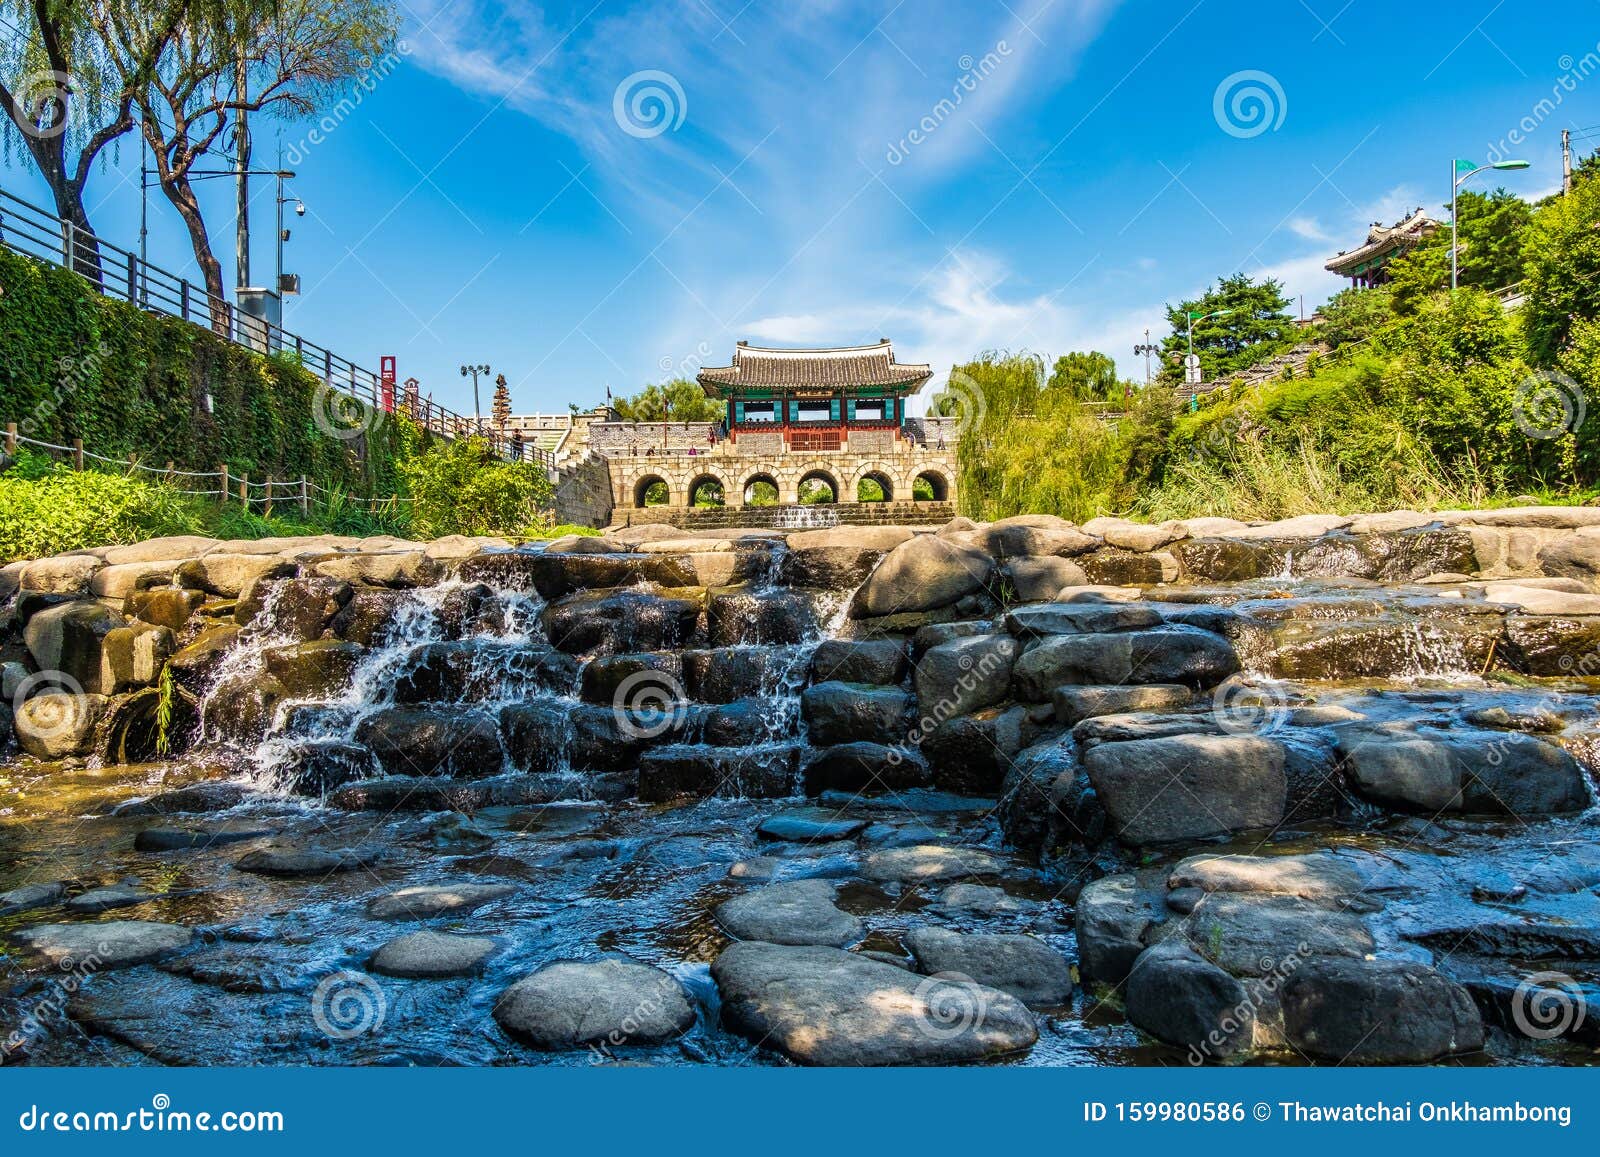 Natural Old City Wall. Hwaseong in Korea in Suwon,seoul,South Korea. Stock Photo - Image of seoul, nature: 159980586